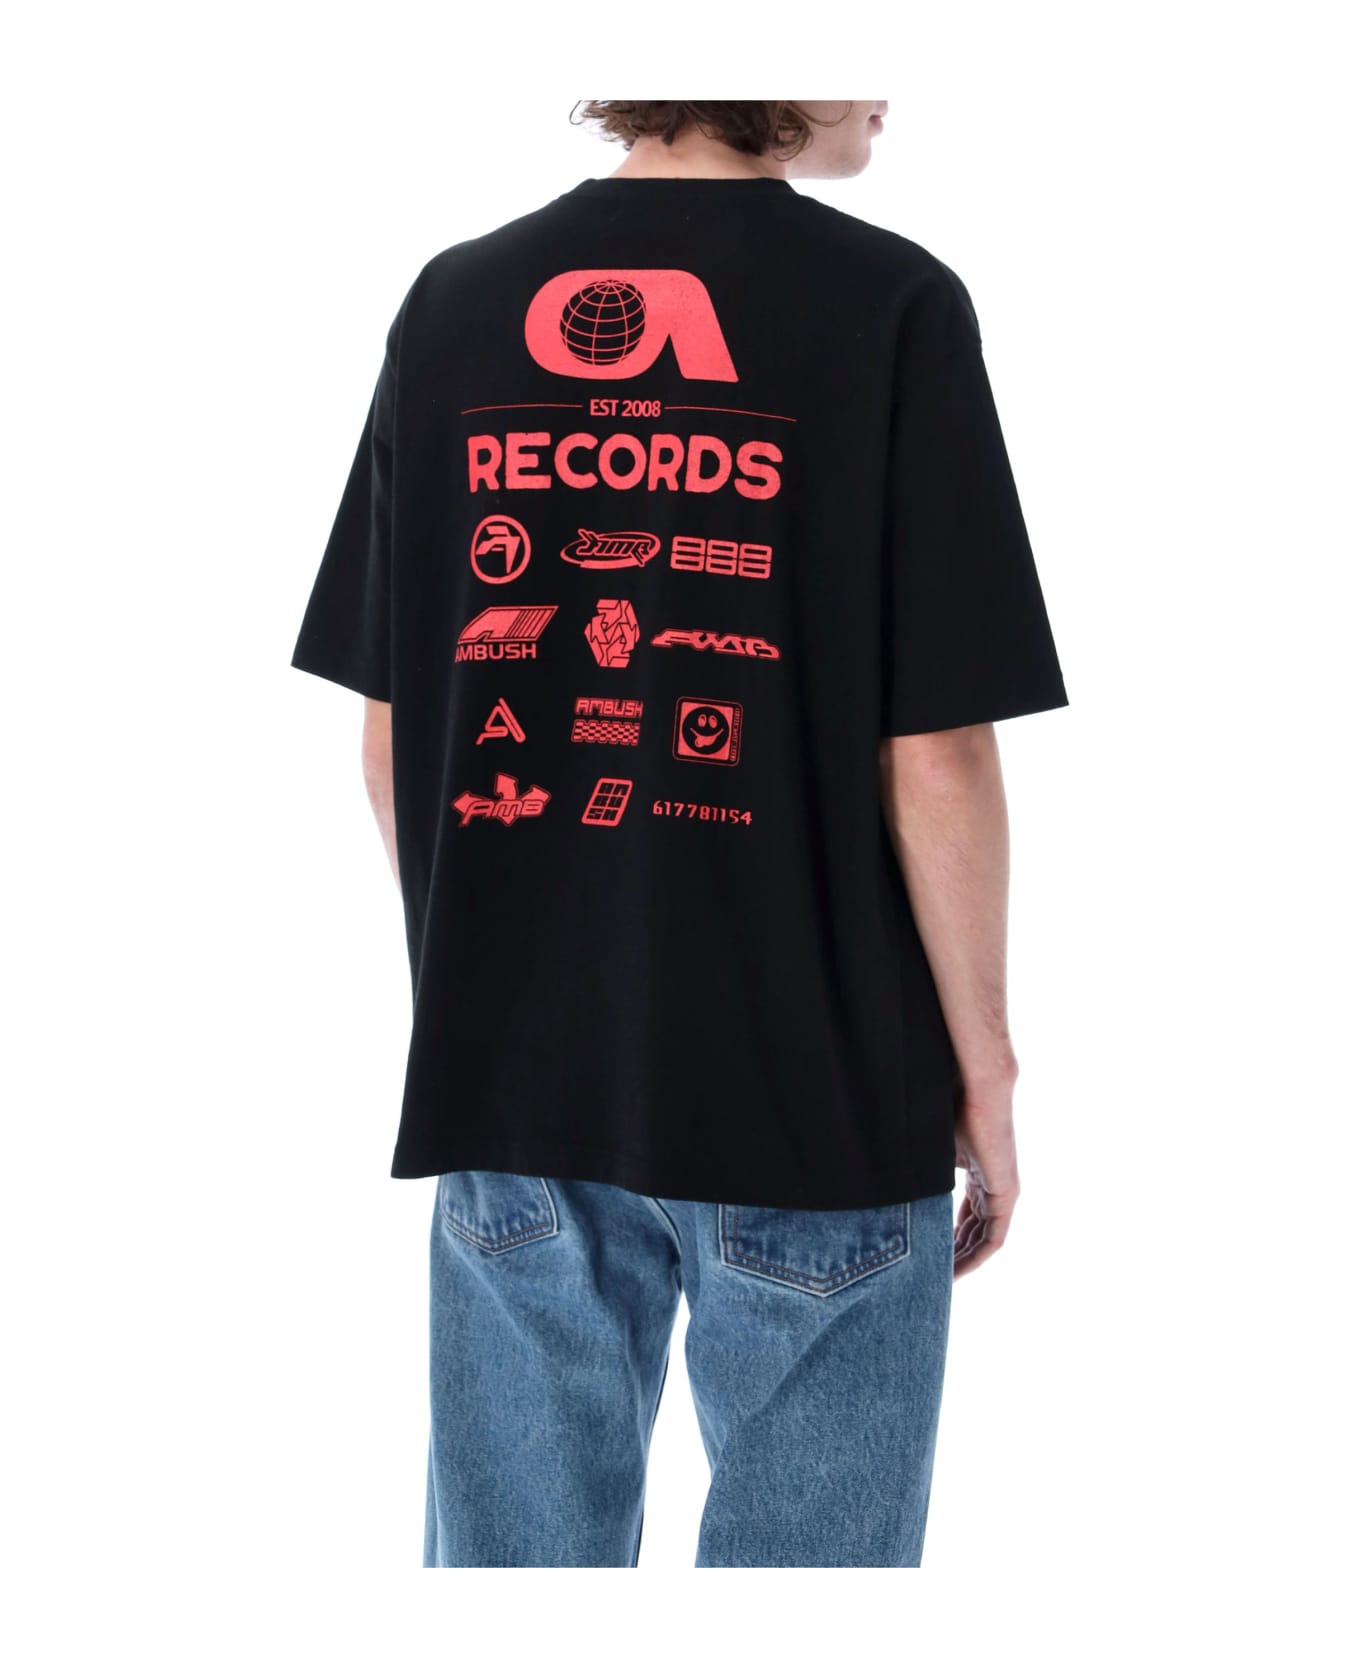 AMBUSH Records Graphic Printed T-shirt - BLACK